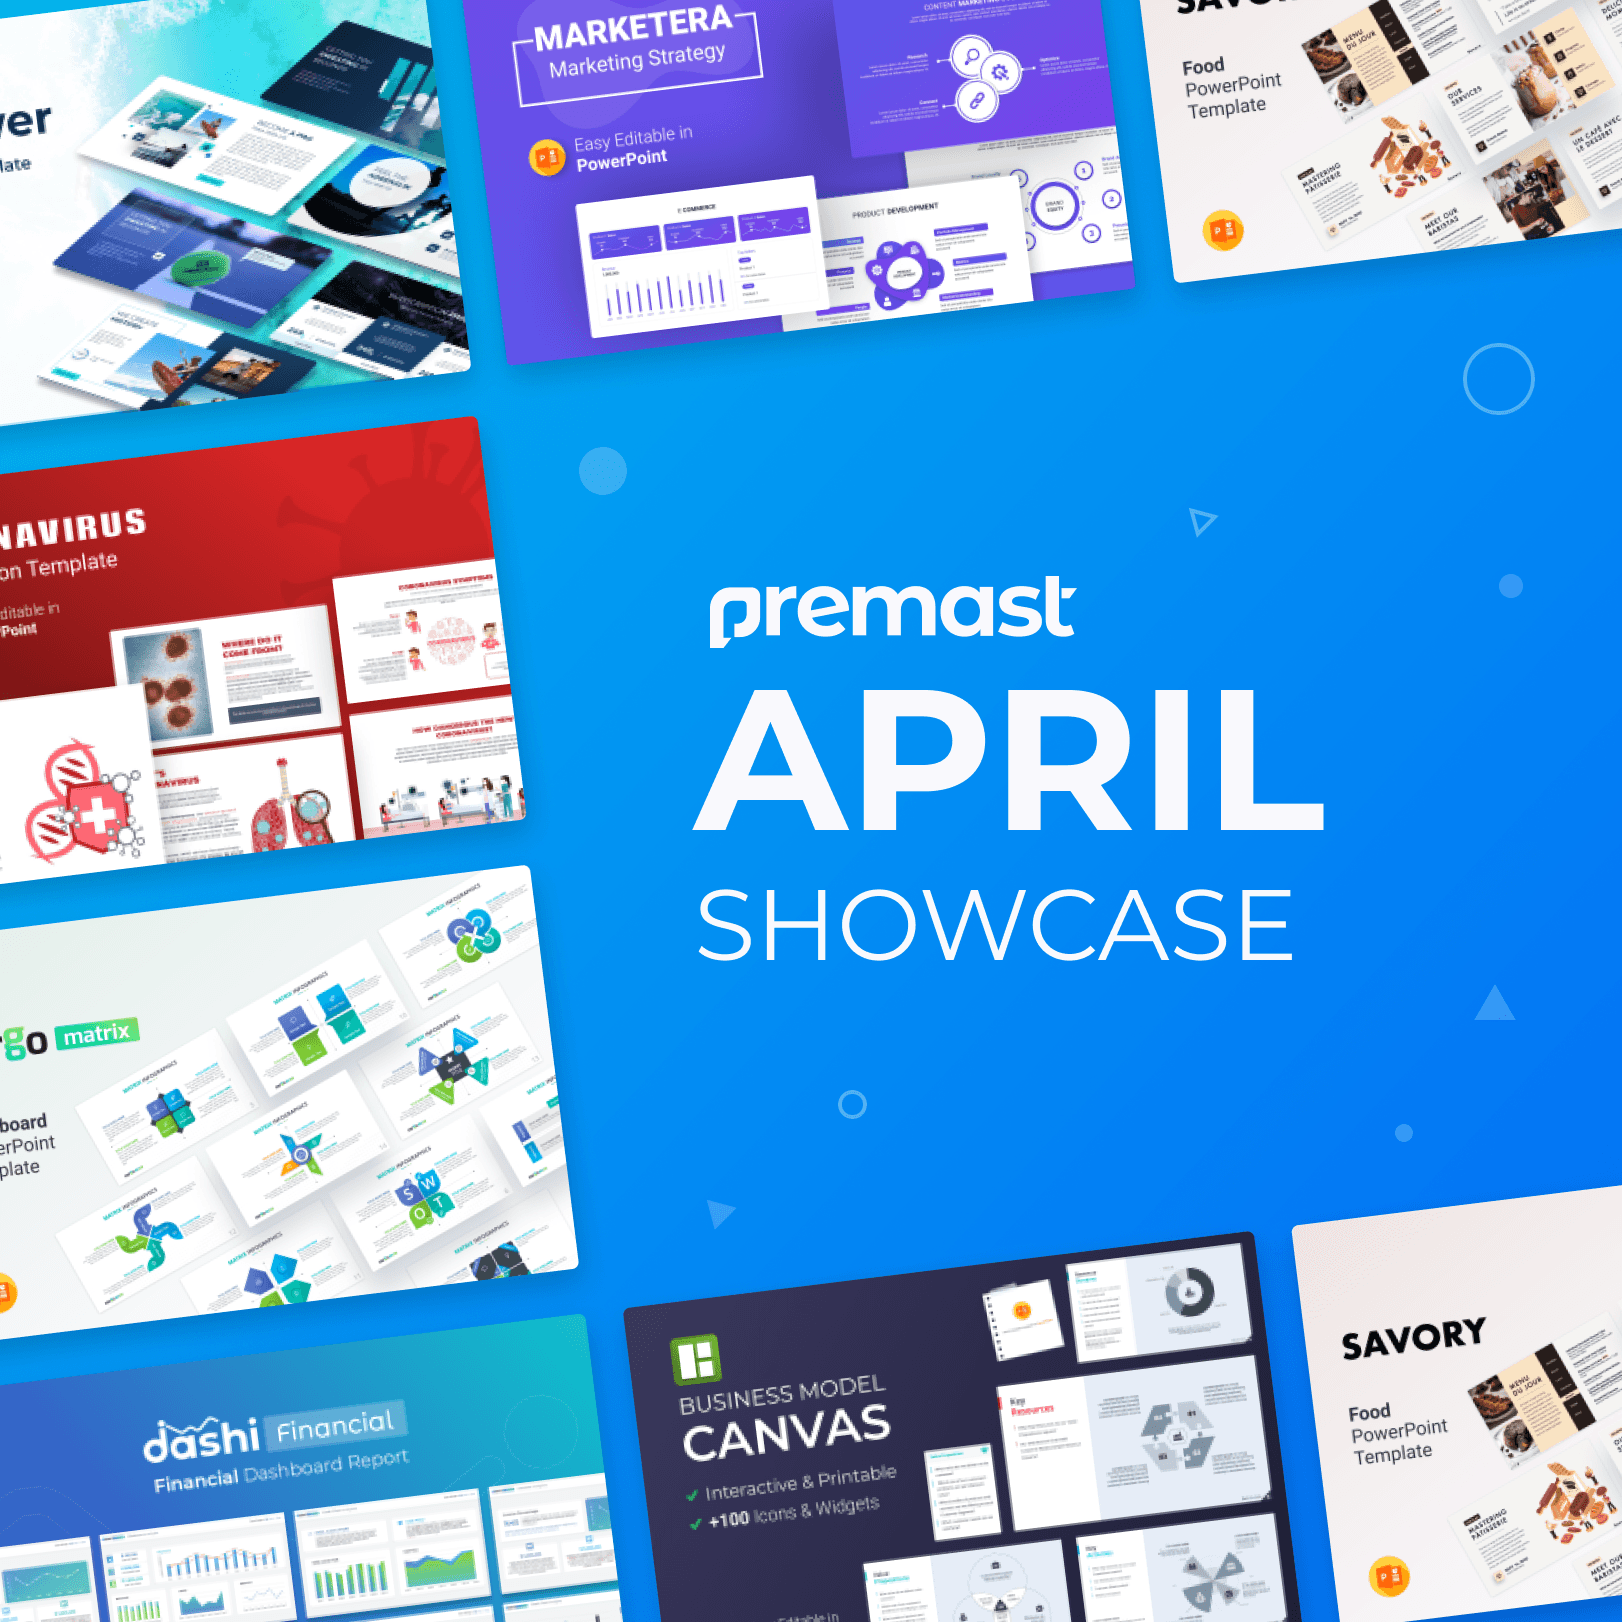 April 2020 Showcase: Top PowerPoint Presentation Templates